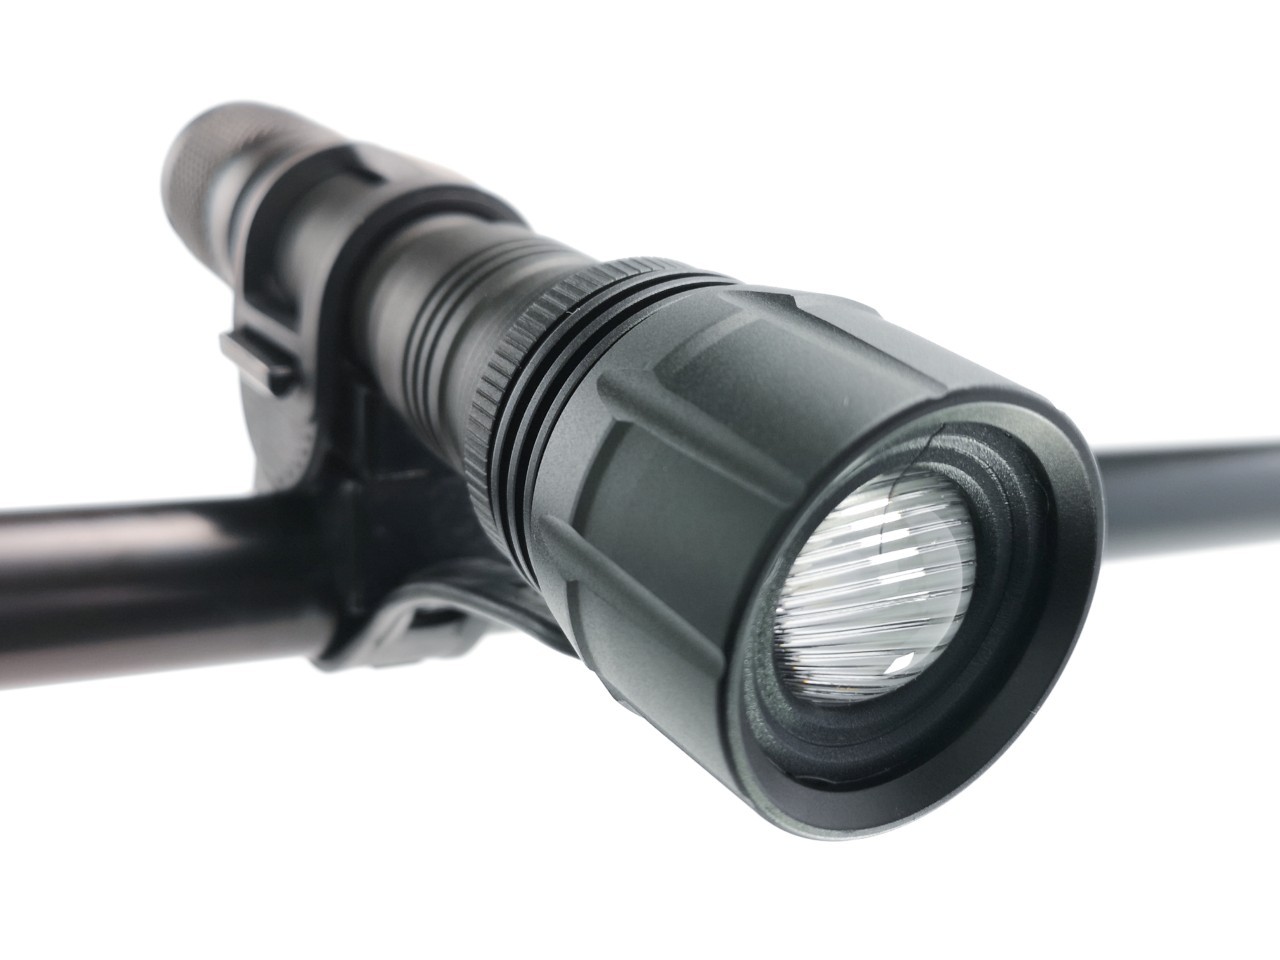 PSK BIKELIGHT 調焦 水平截止線 1300流明 腳踏車燈 18650手電筒 套組含電池車夾